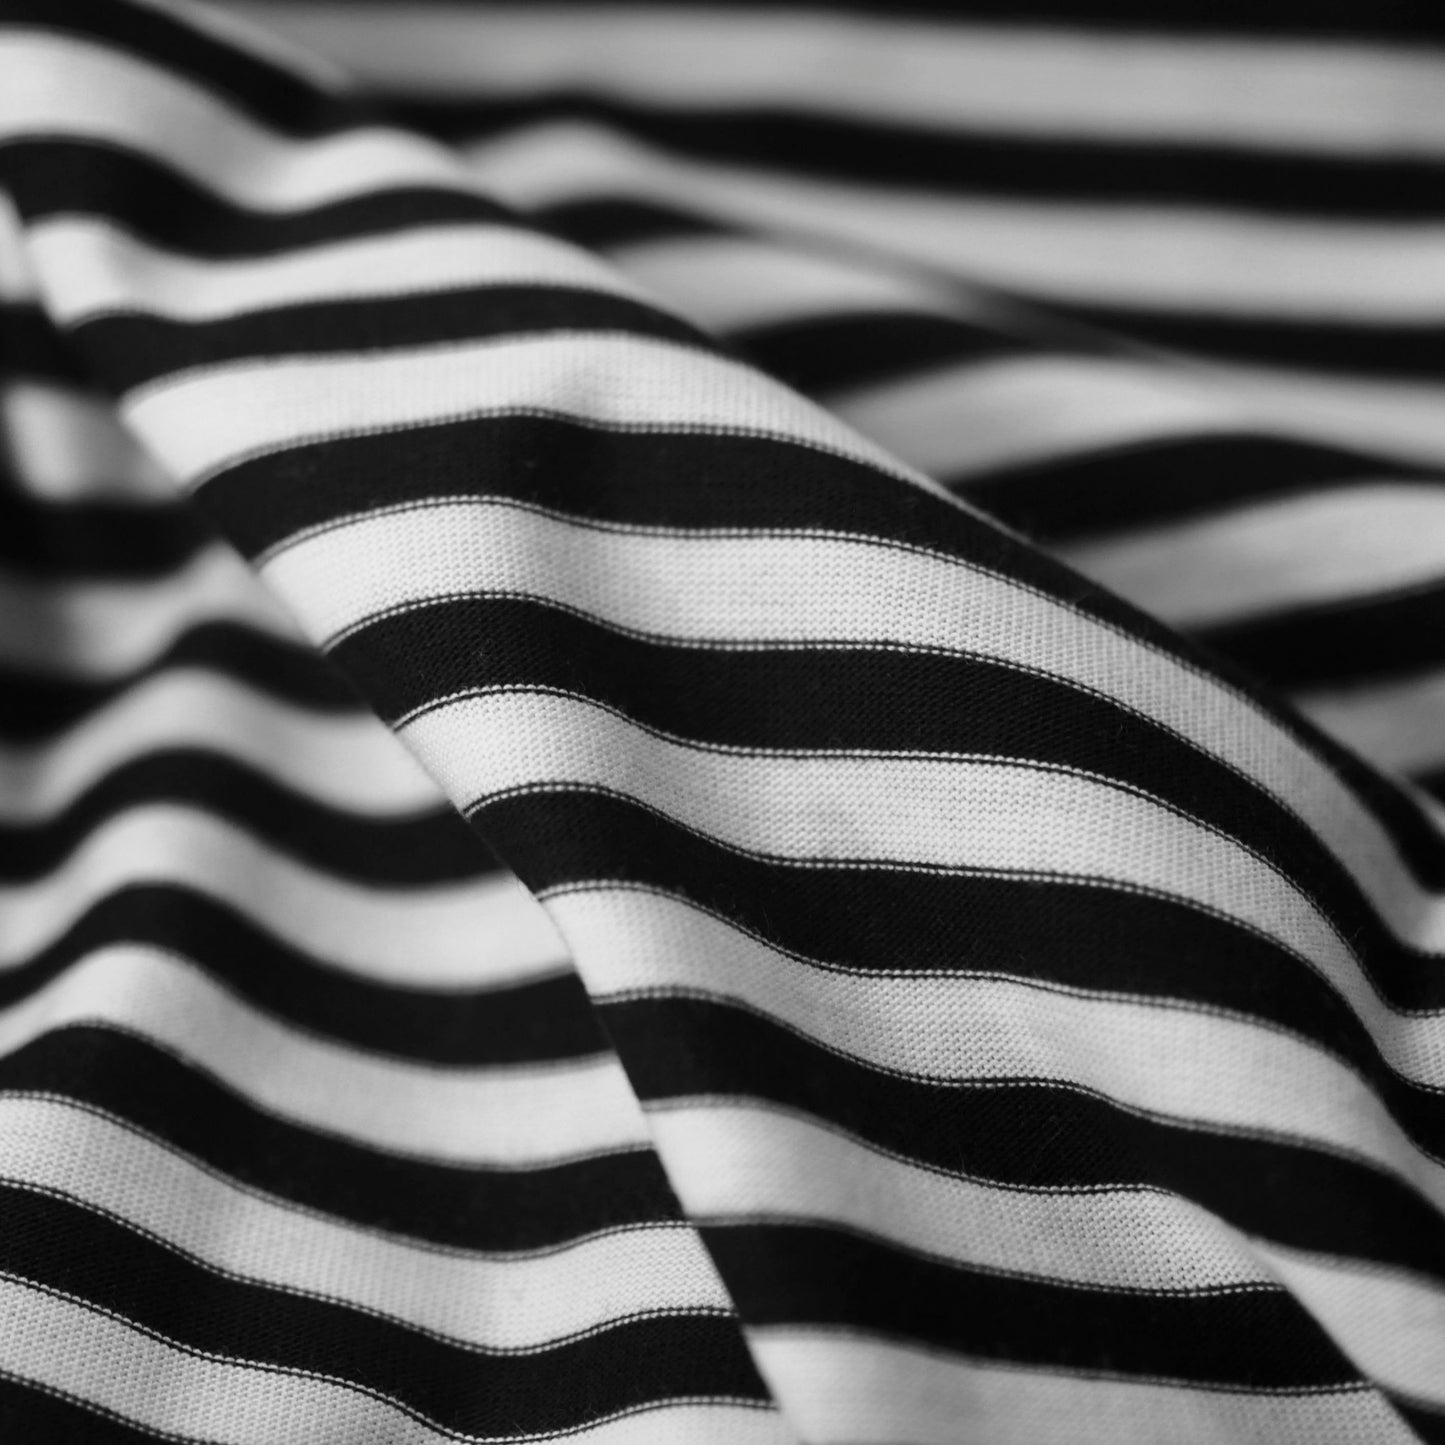 100% Organic Cotton Single Jersey - Black/White Stripe (2SP206)